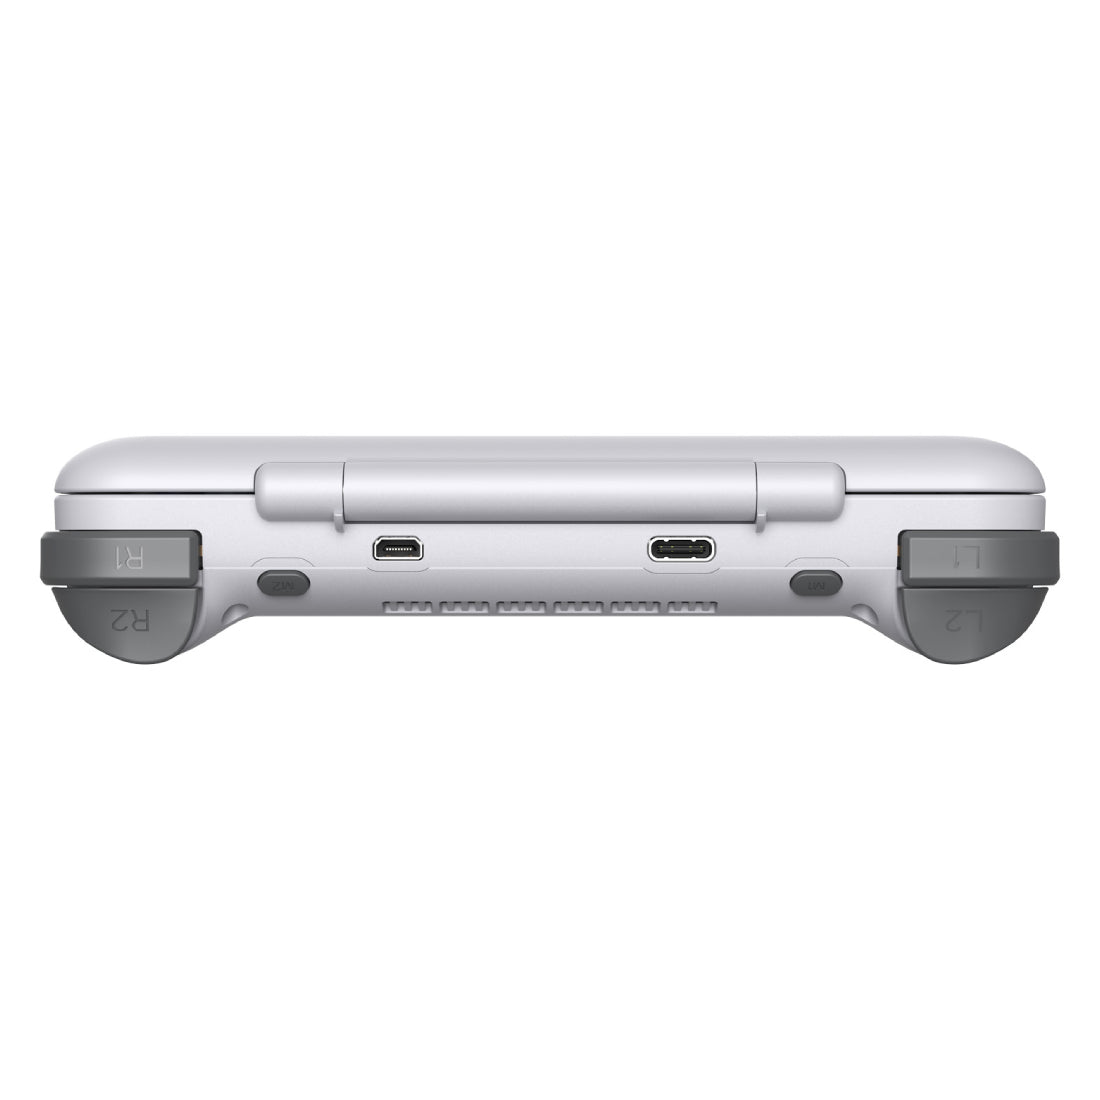 Retroid Pocket Flip Handheld Gaming Console - White - جهاز ألعاب - Store 974 | ستور ٩٧٤